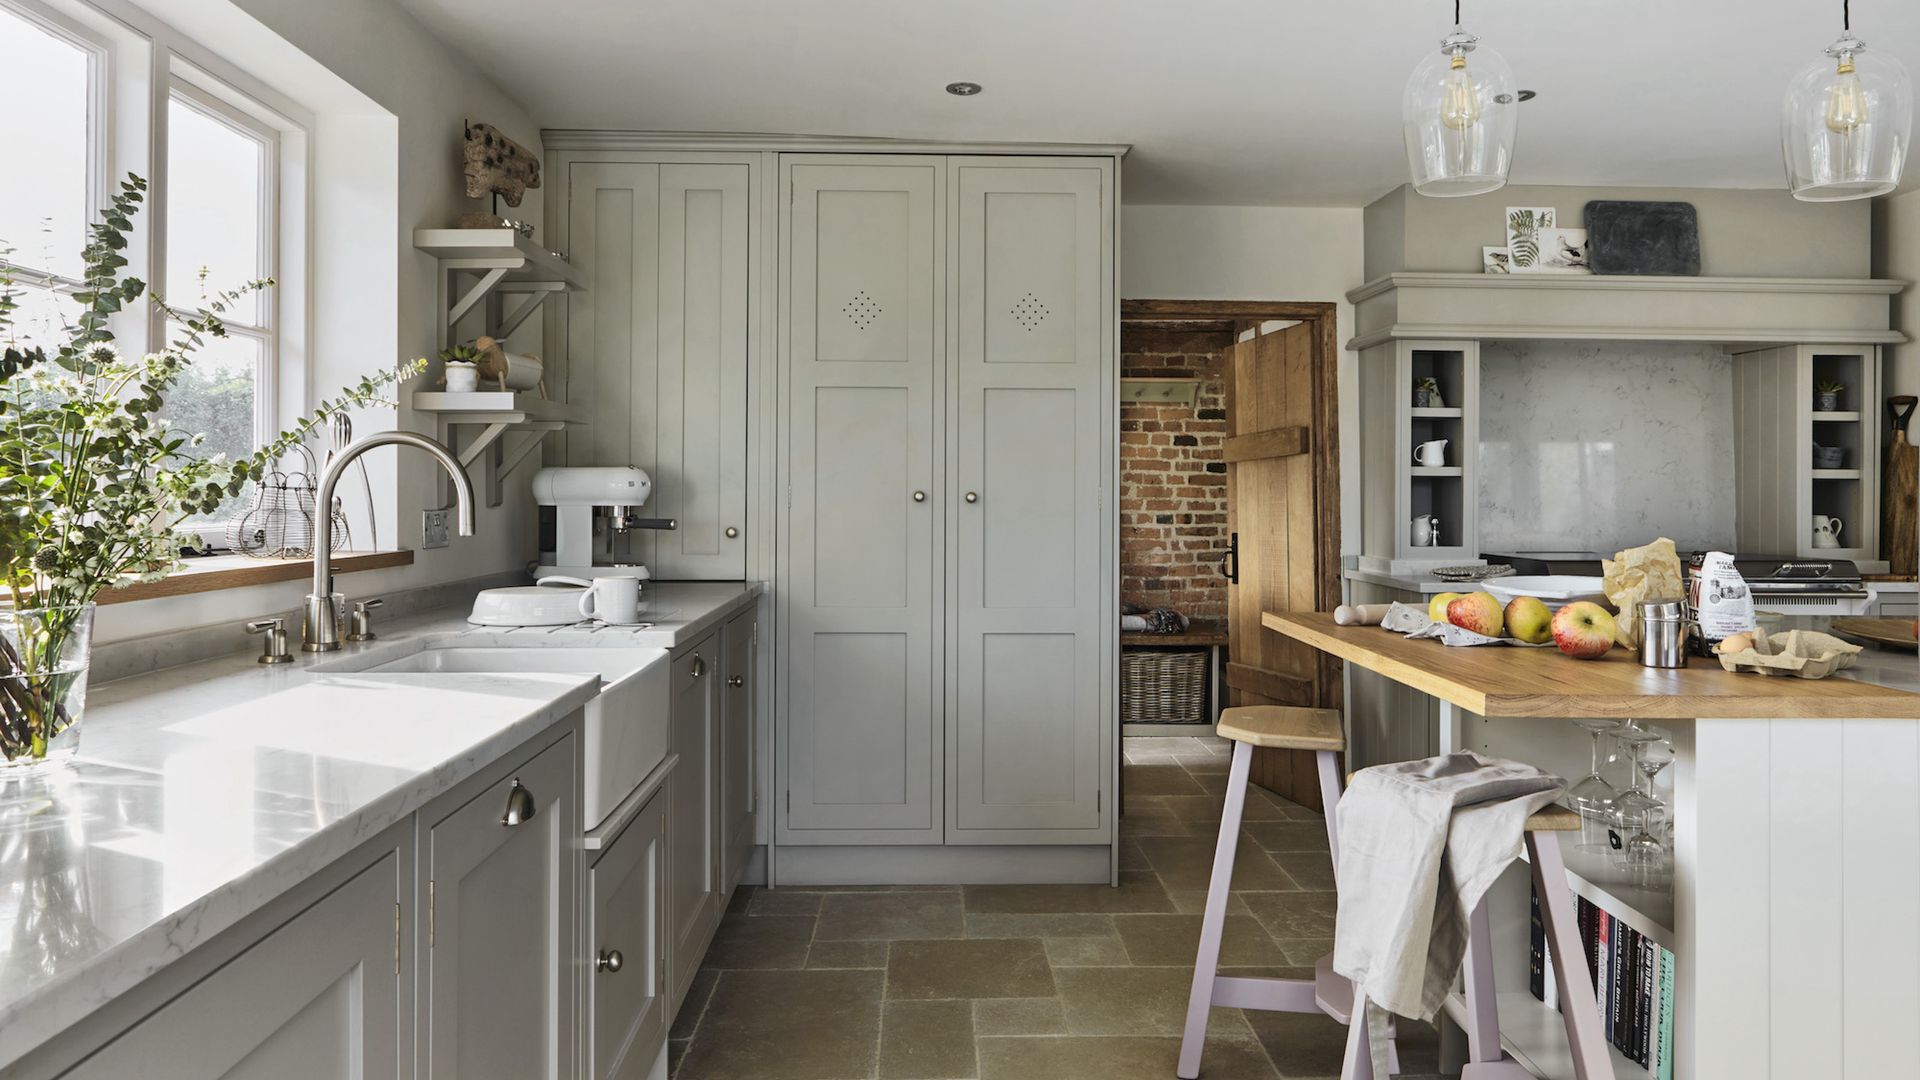 Cottage kitchen ideas: 21 pretty ways to decorate homey spaces